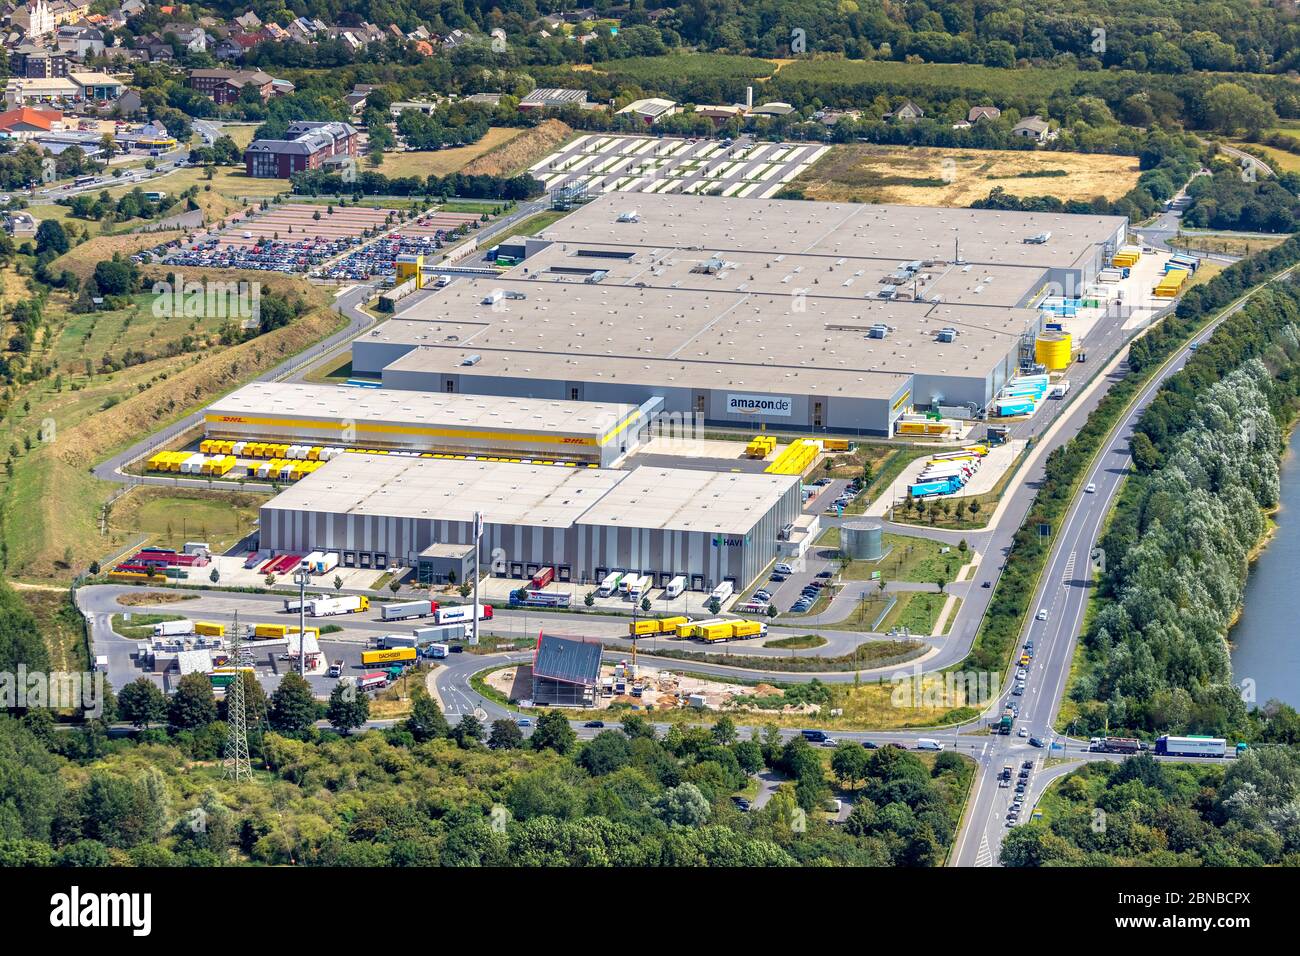 Amazon Logistikzentrum Rheinberg, Havi Logistik, Rheinberger Strasse, 08.08.2019, Luftbild, Germany, North Rhine-Westphalia, Ruhr Area, Rheinberg Stock Photo